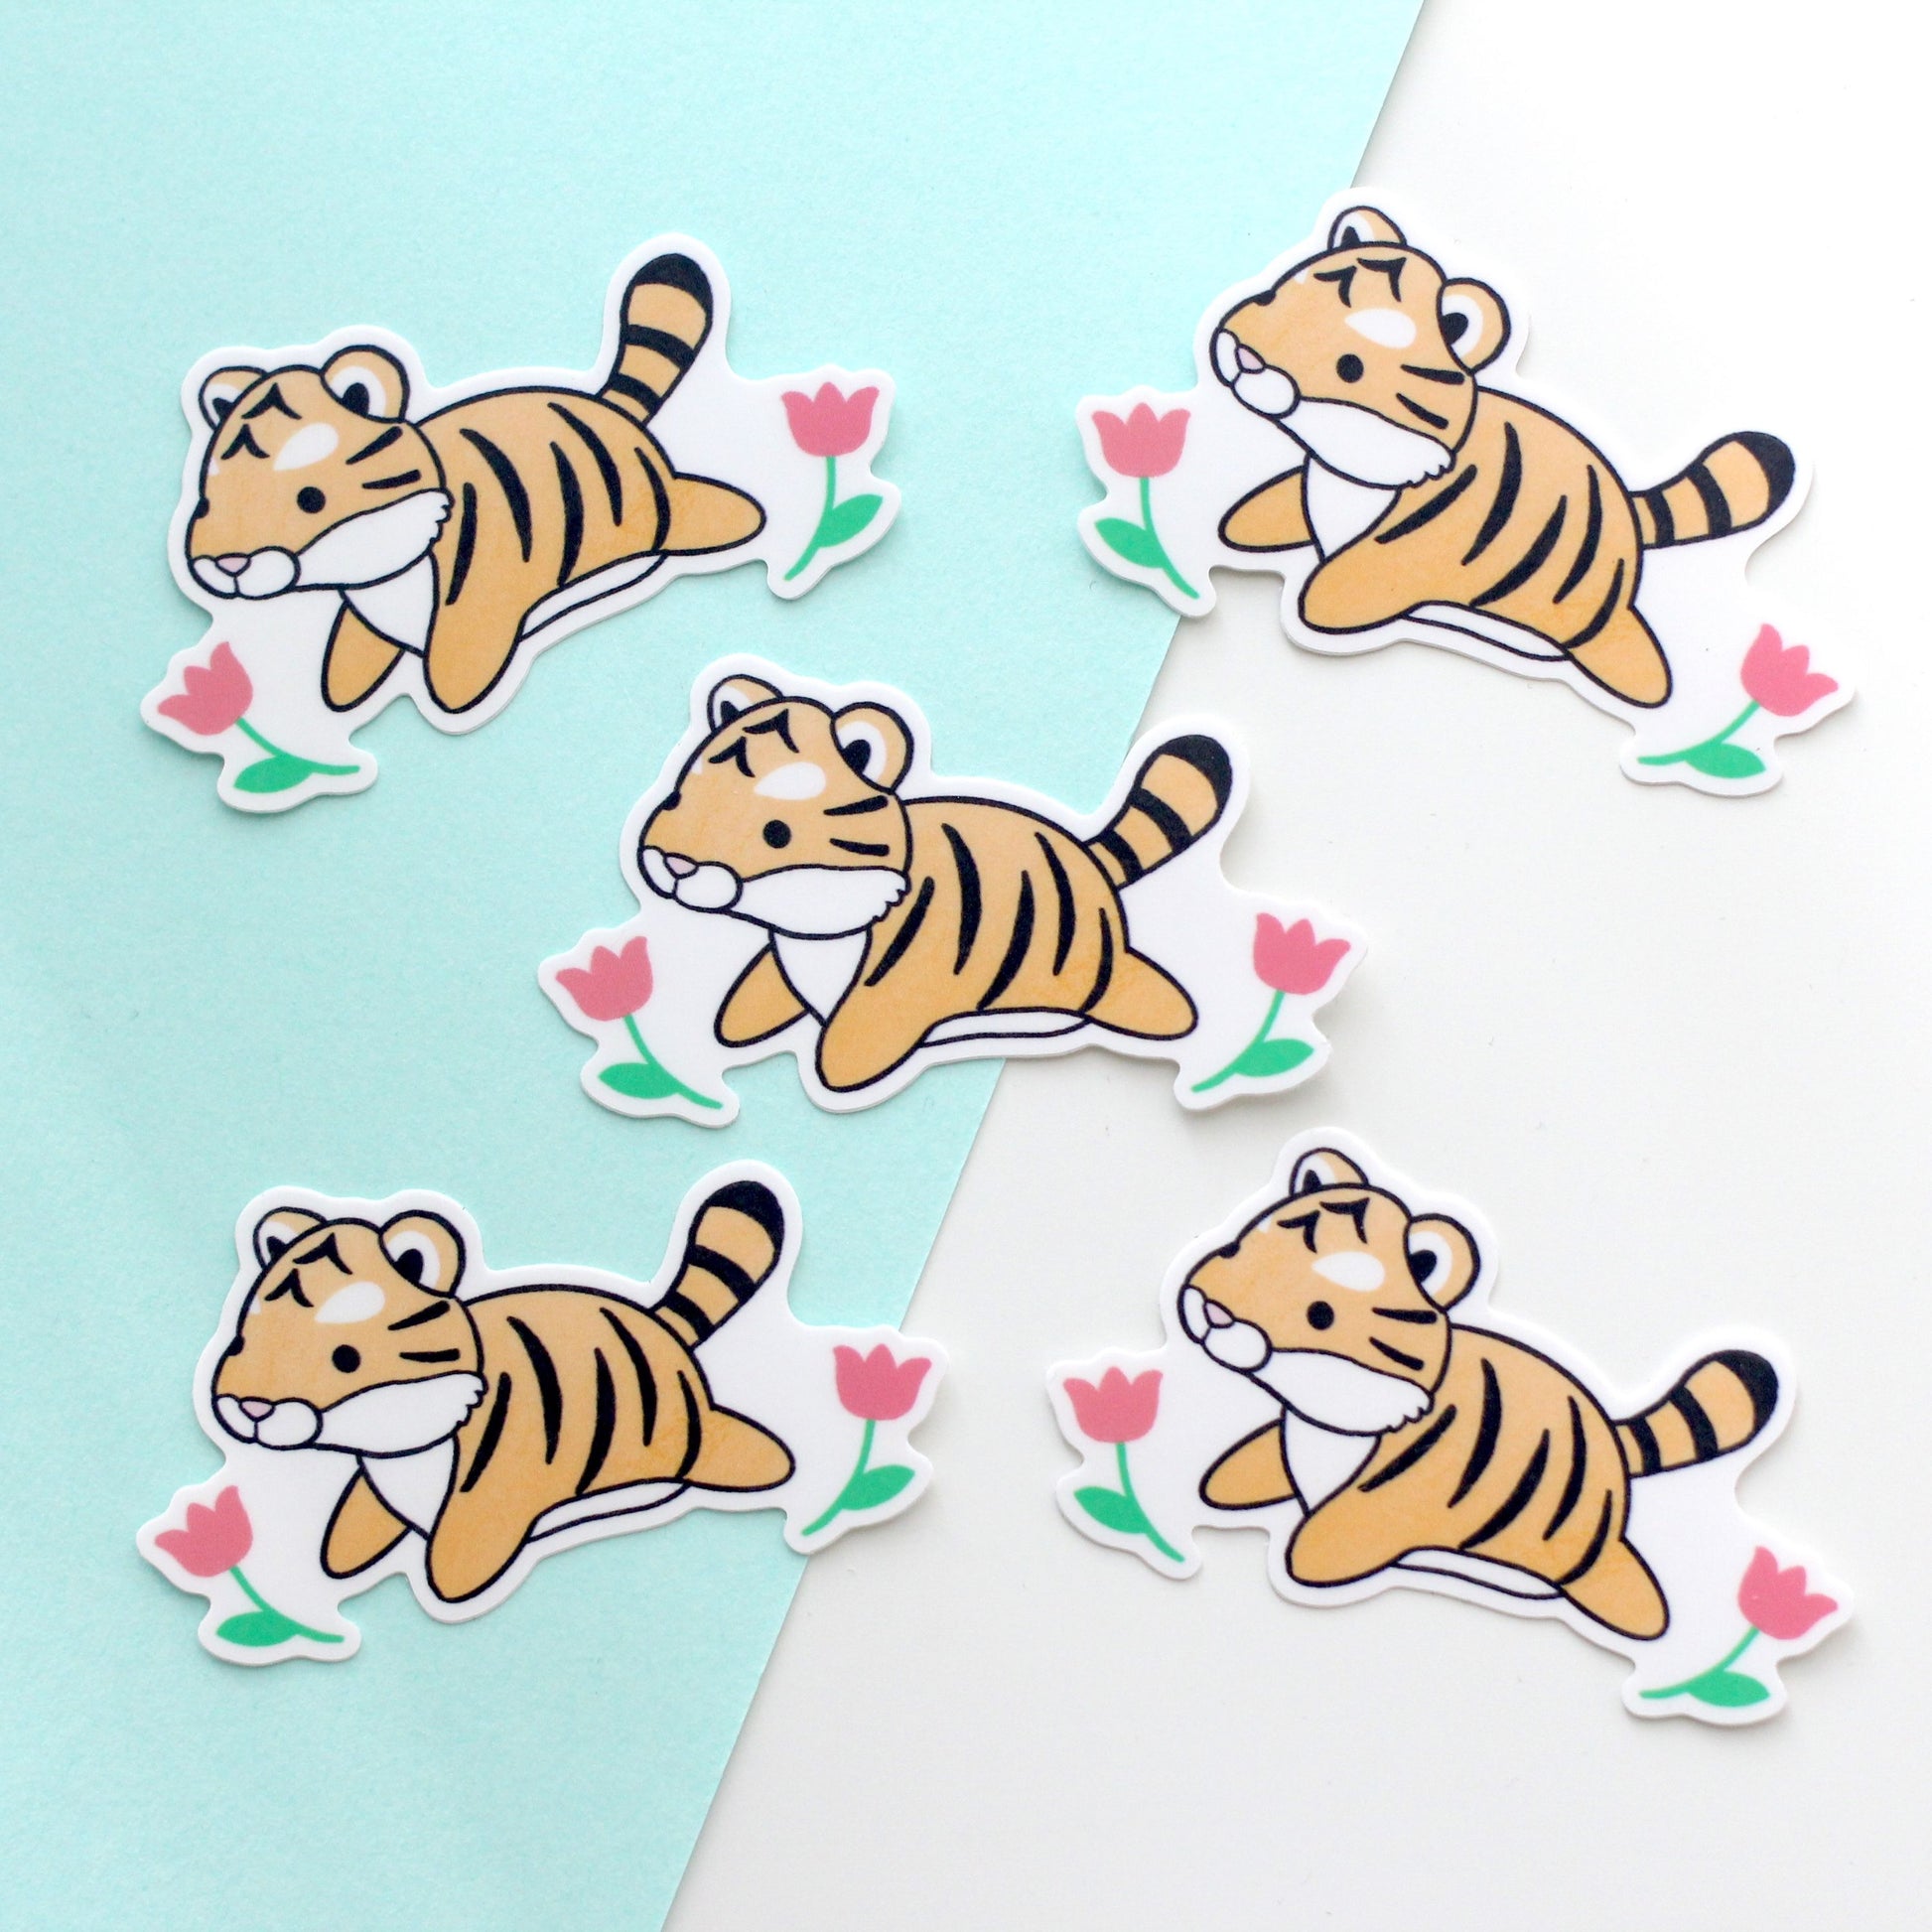 Tiger Vinyl Sticker. Tiger Stationery. Clear Vinyl Sticker by Wild Whimsy Woolies